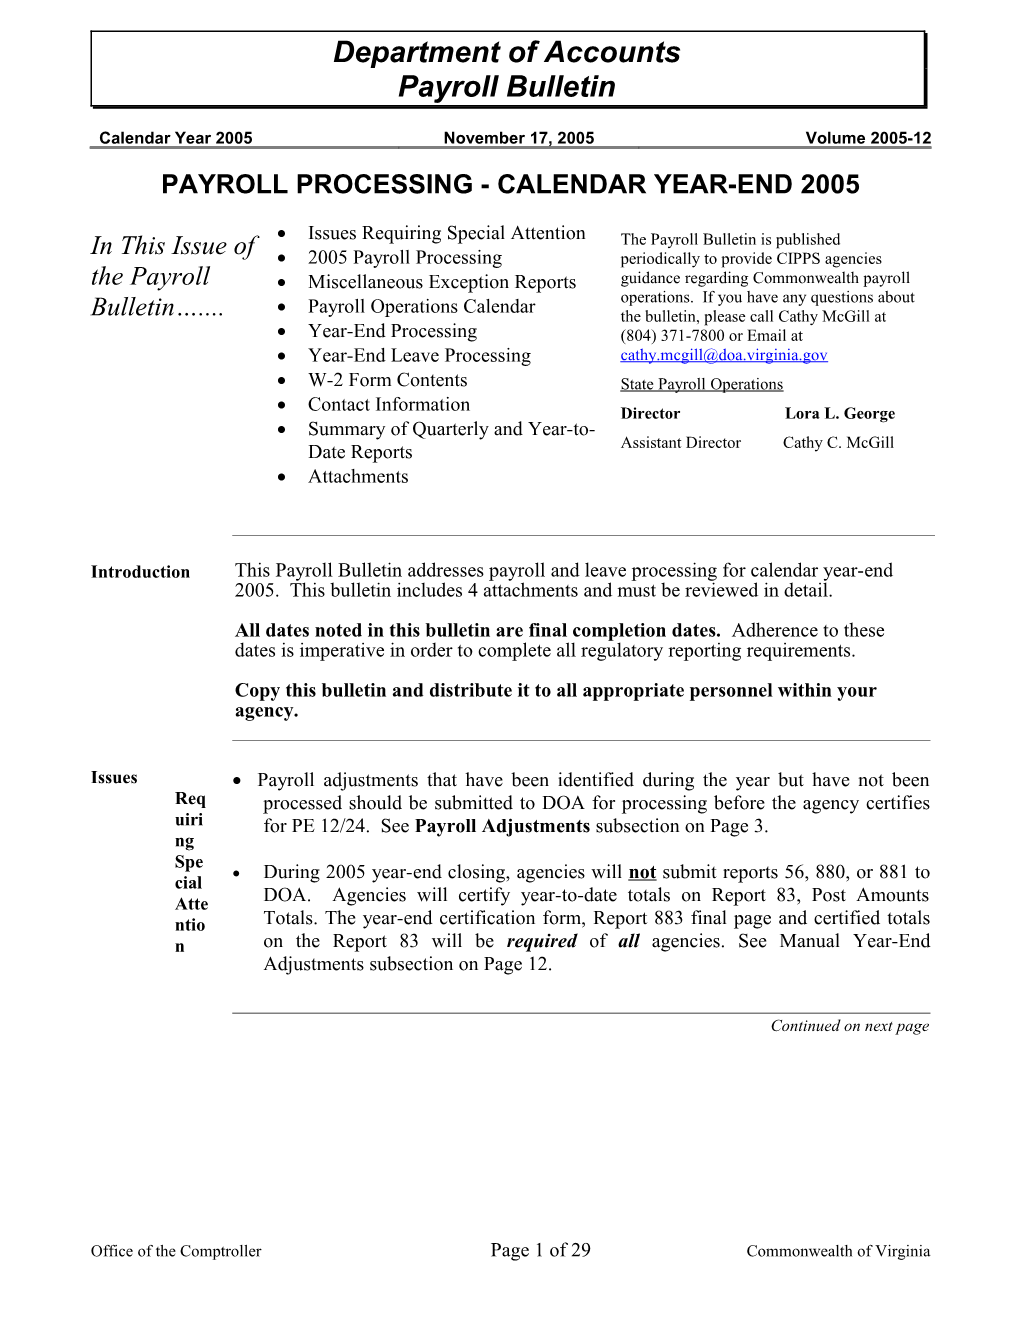 Payroll Bulletin, Volume 2005-12